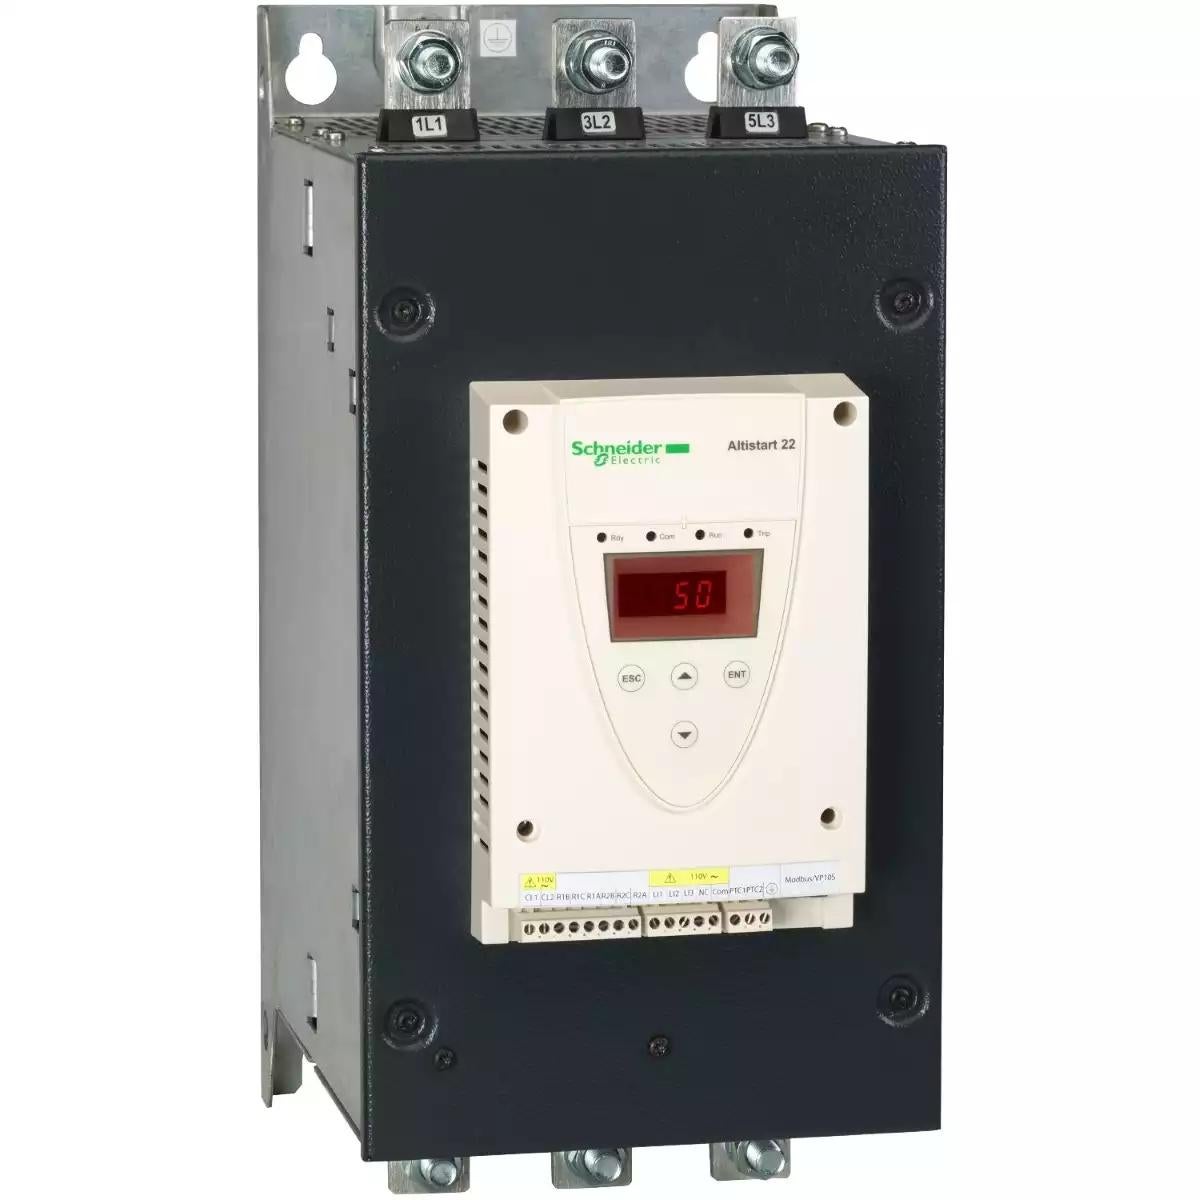 Schneider Electric Altistart 22 soft starter - ATS22 - control 220V-power 230V(55kW)/400...440V(110kW)